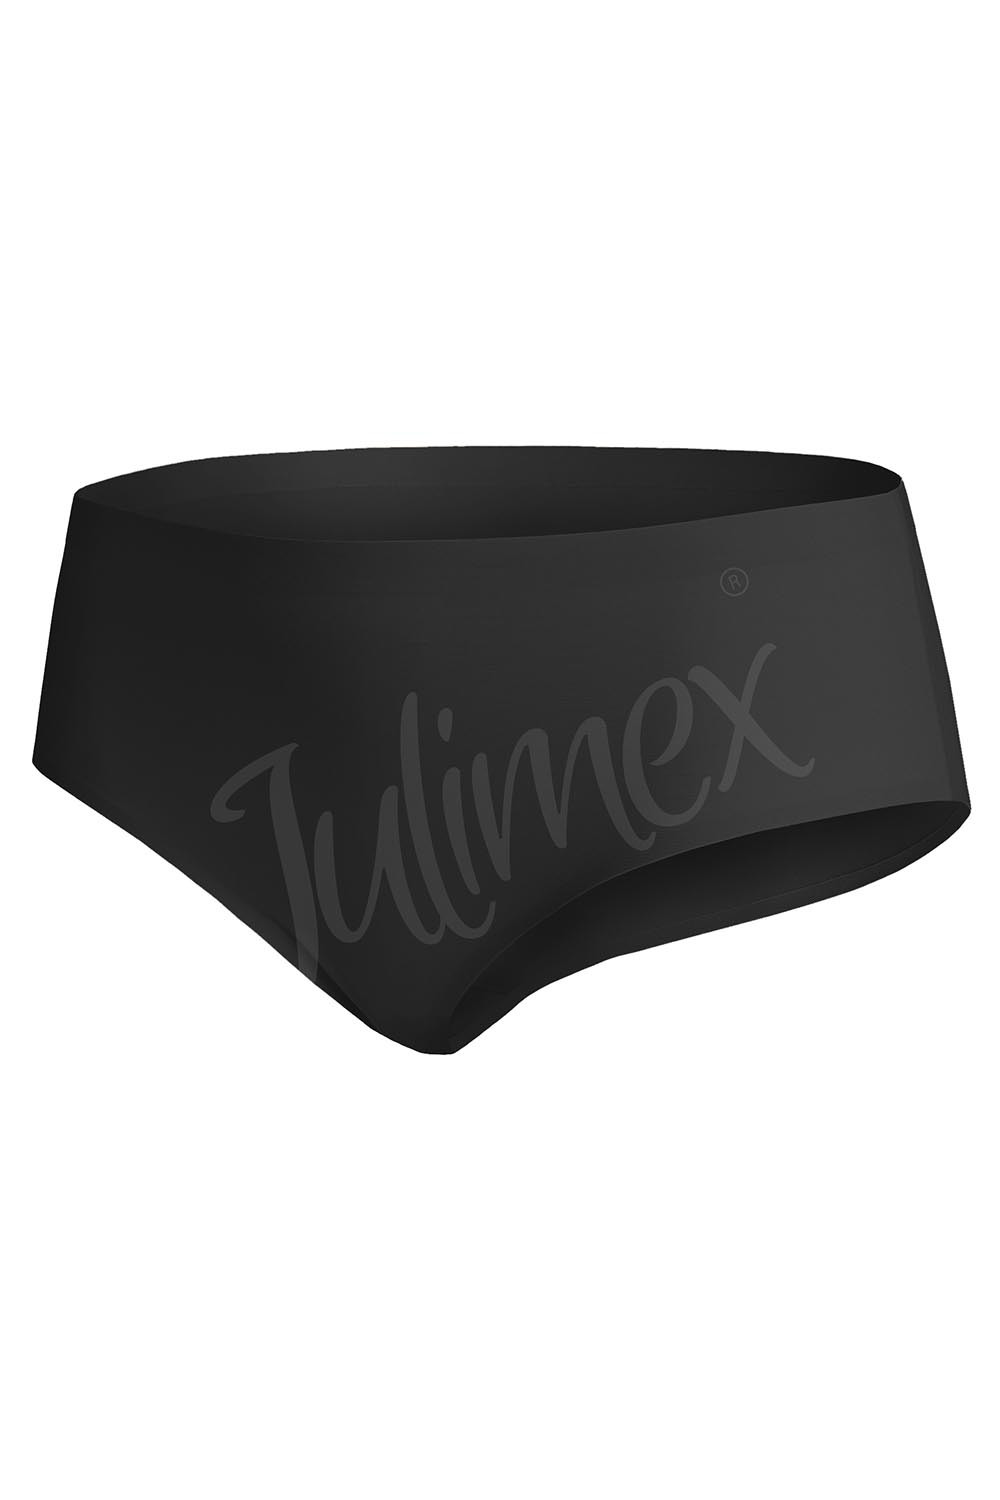 Julimex Simple panty kolor:czarny M